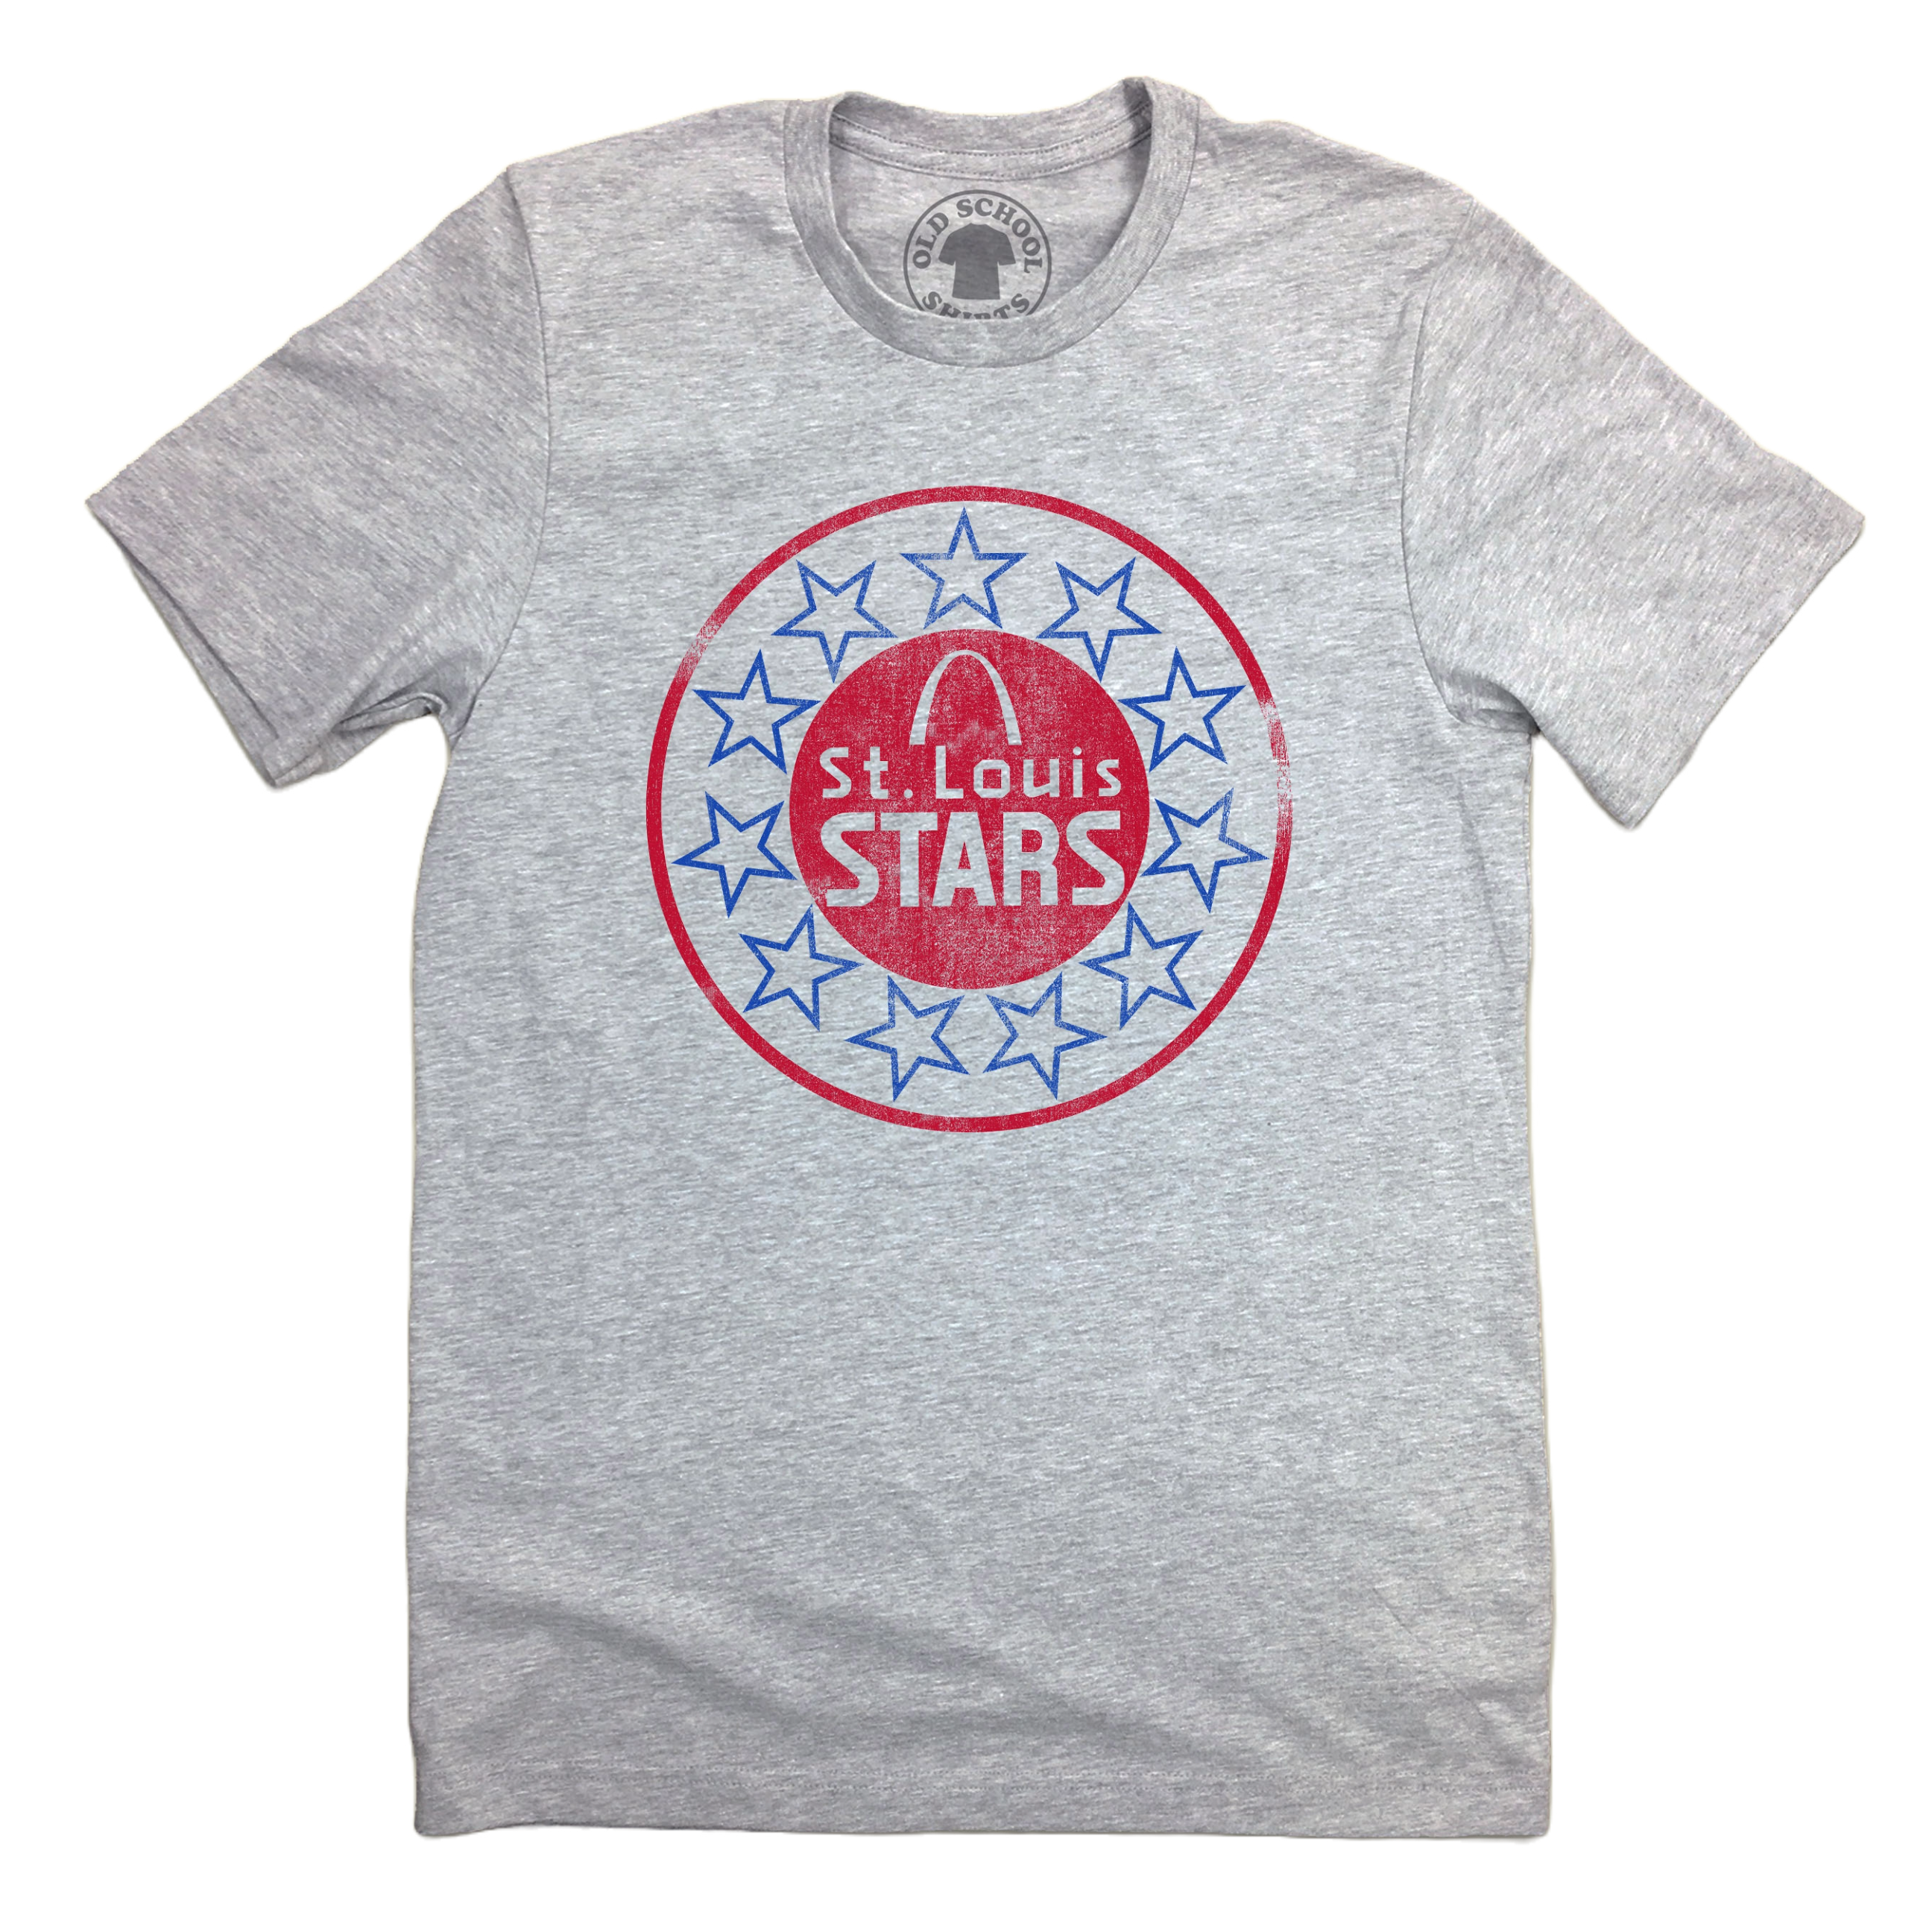 St. Louis Stars Soccer, Vintage Sports Apparel